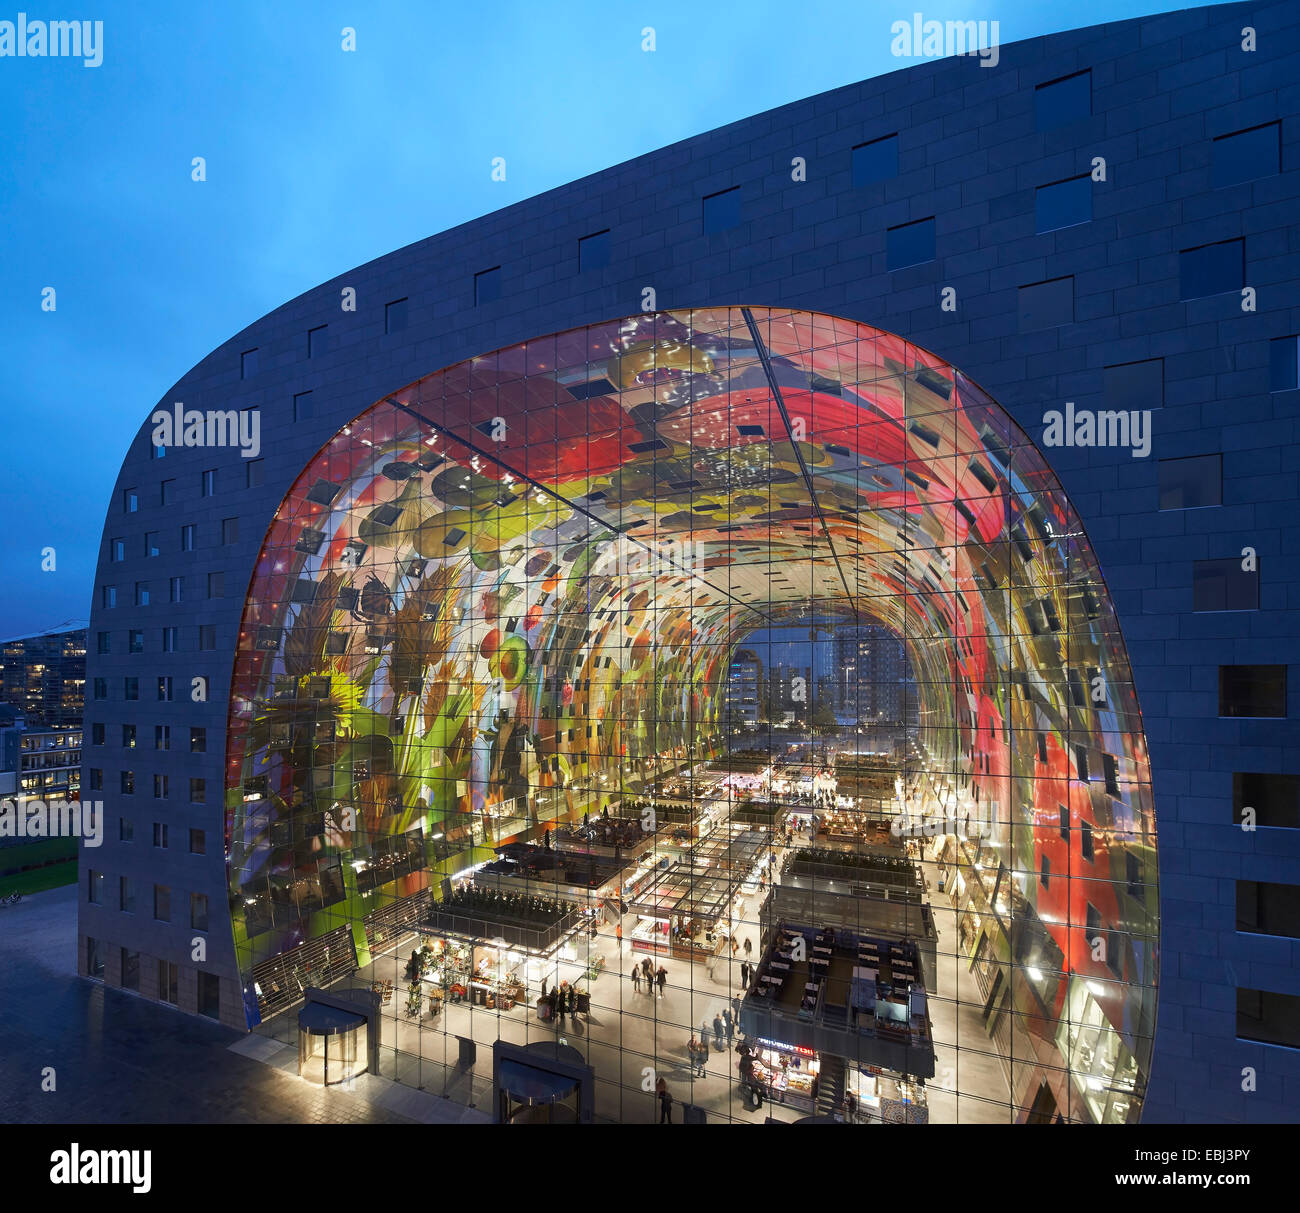 Market Hall Rotterdam, Rotterdam, Netherlands. Architect: MVRDV, 2014. Dusk elevation with illuminated and glowing interior. Stock Photo